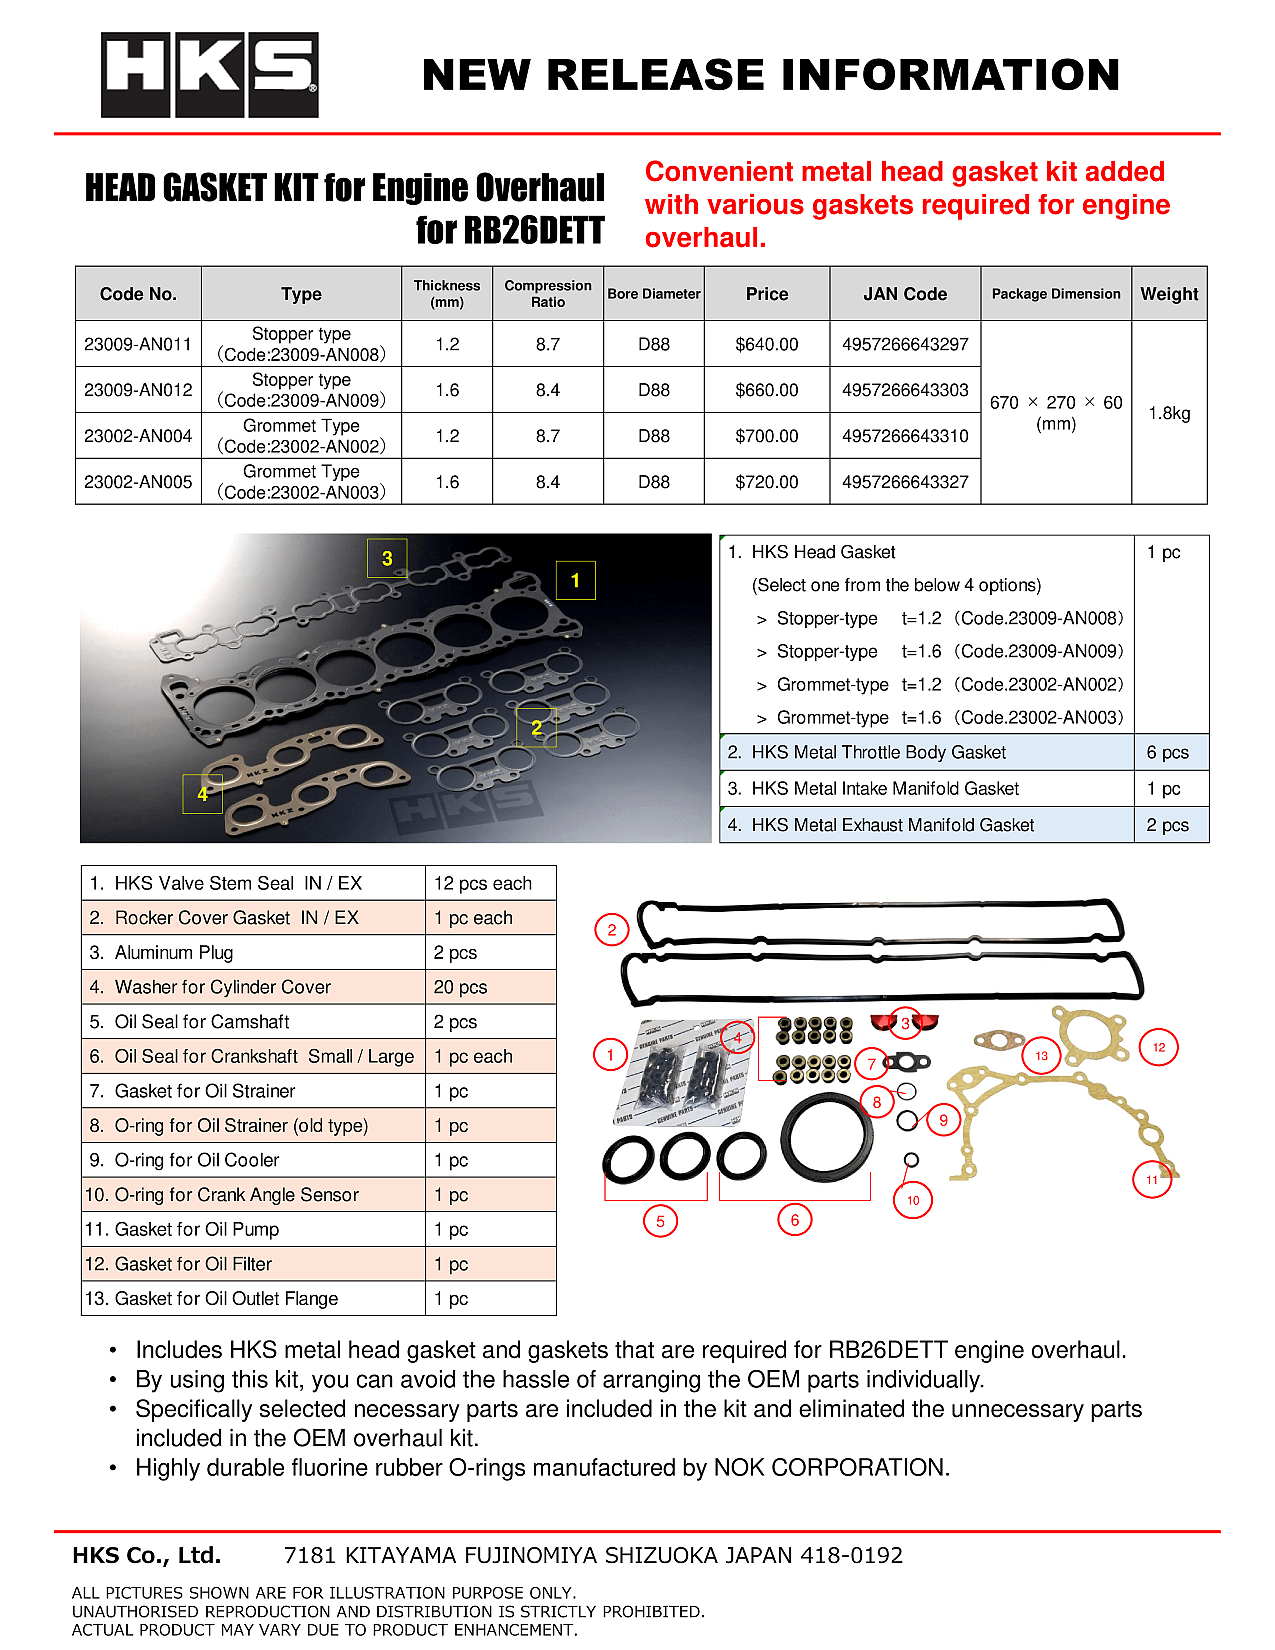 23009-AN011 Head Gasket Kit for RB26DETT Overhaul.png